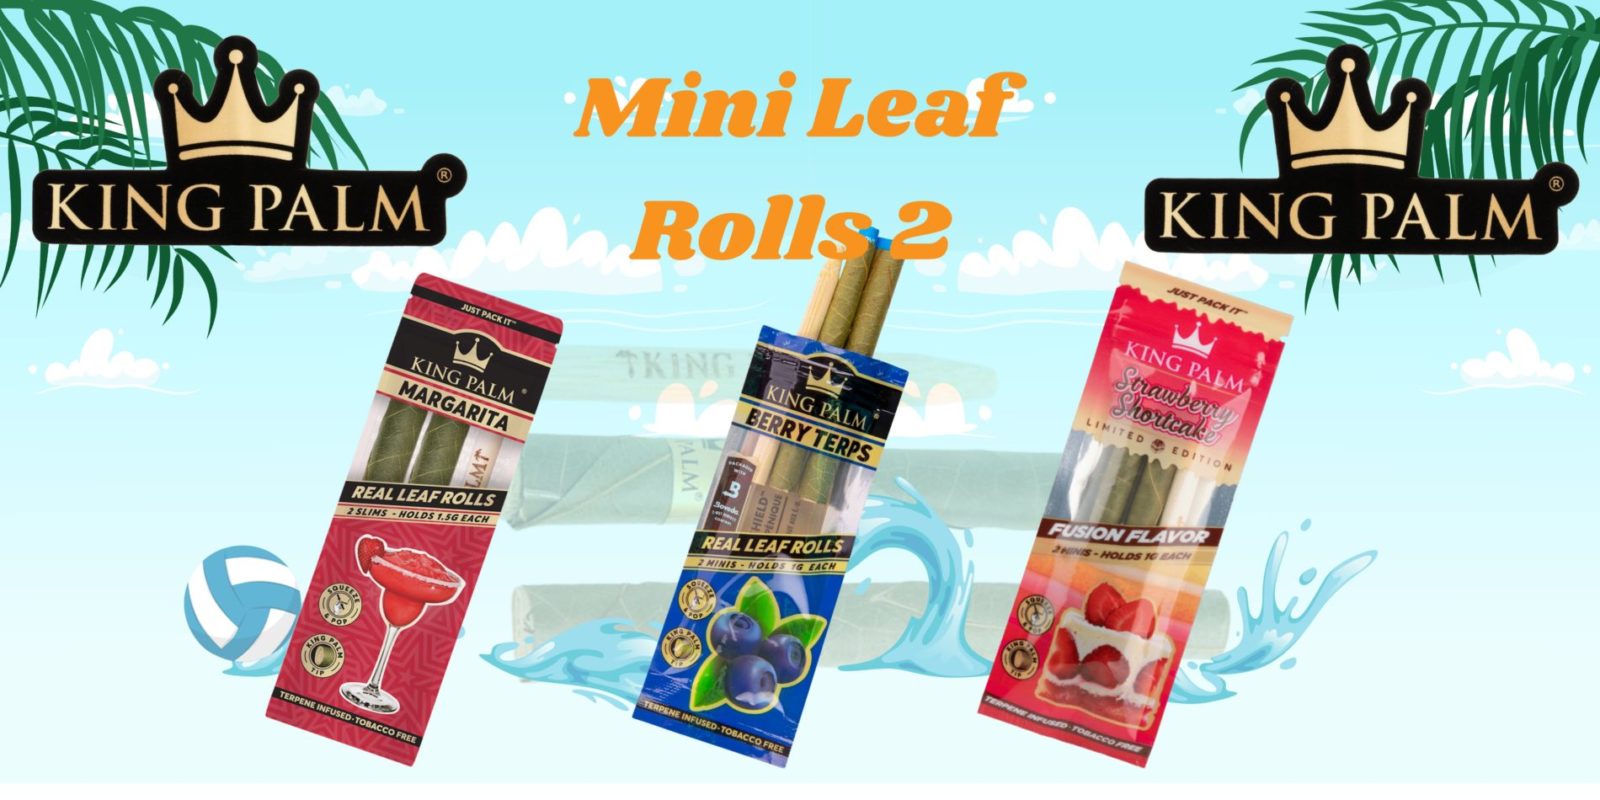 King Palm Mini Leaf Rolls 2 – Strawberry Shortcake 420 SUPPLIES - XMANIA Ireland 18